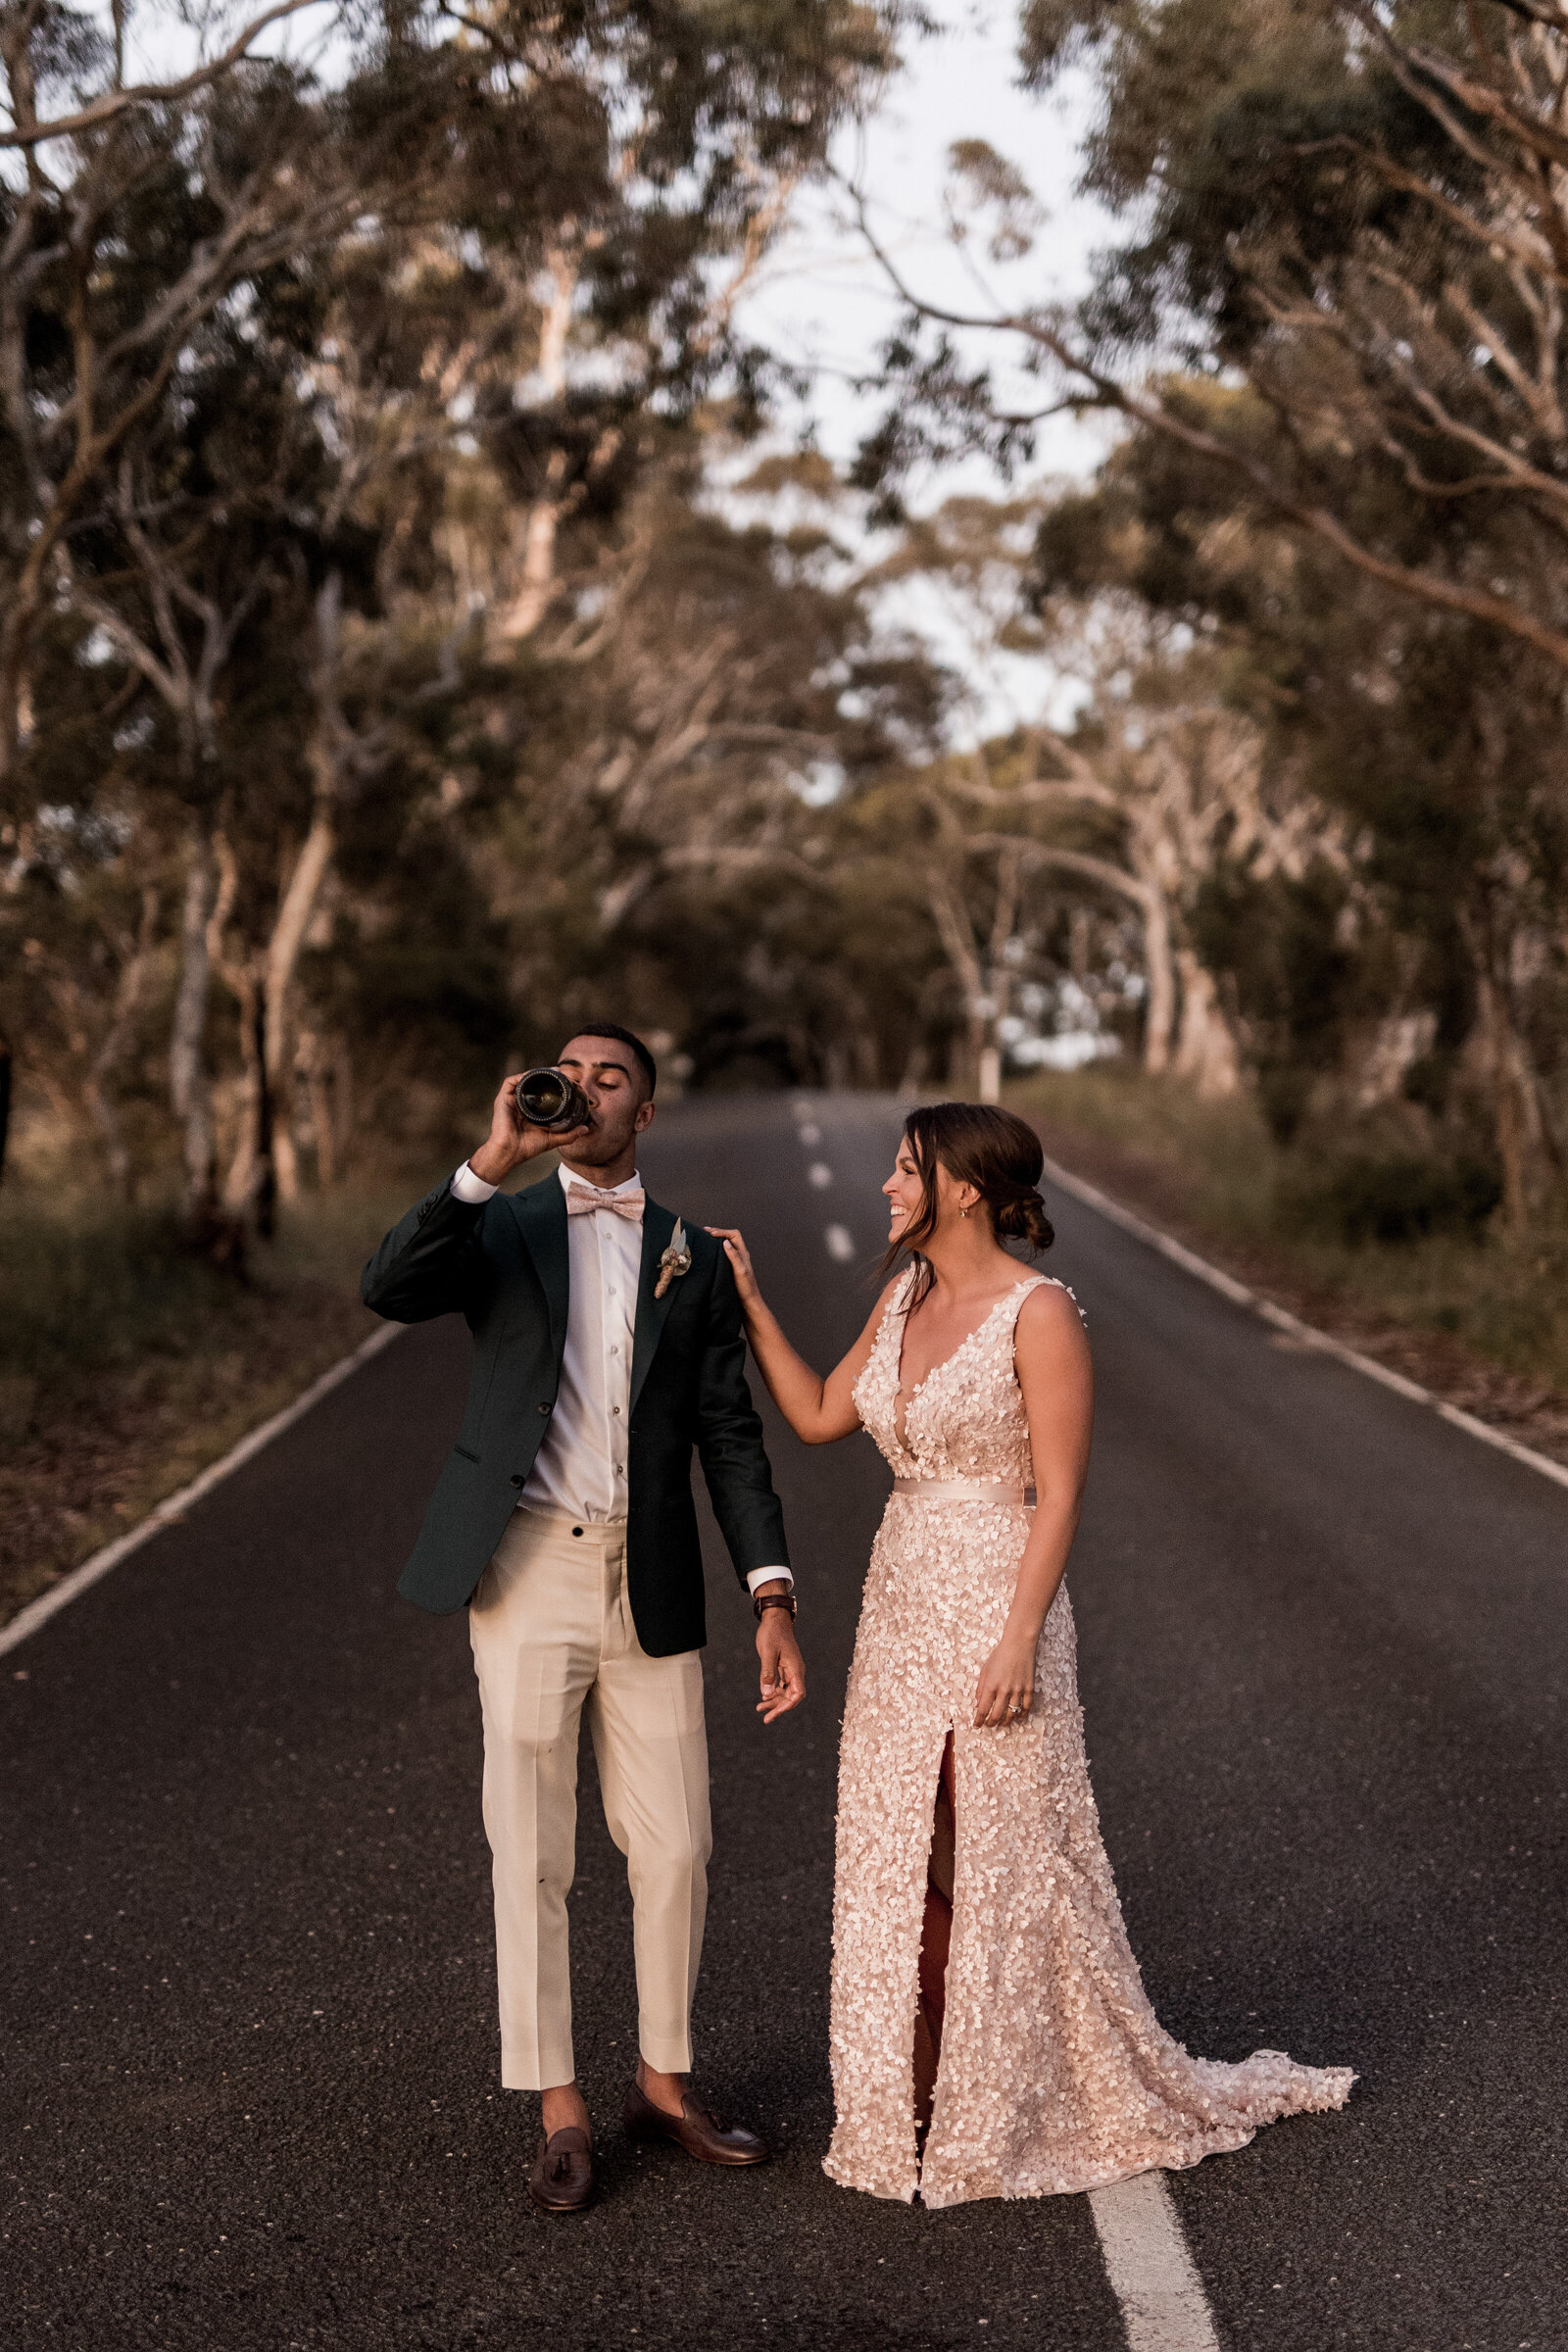 Chloe-Benny-Rexvil-Photography-Adelaide-Wedding-Photographer-493